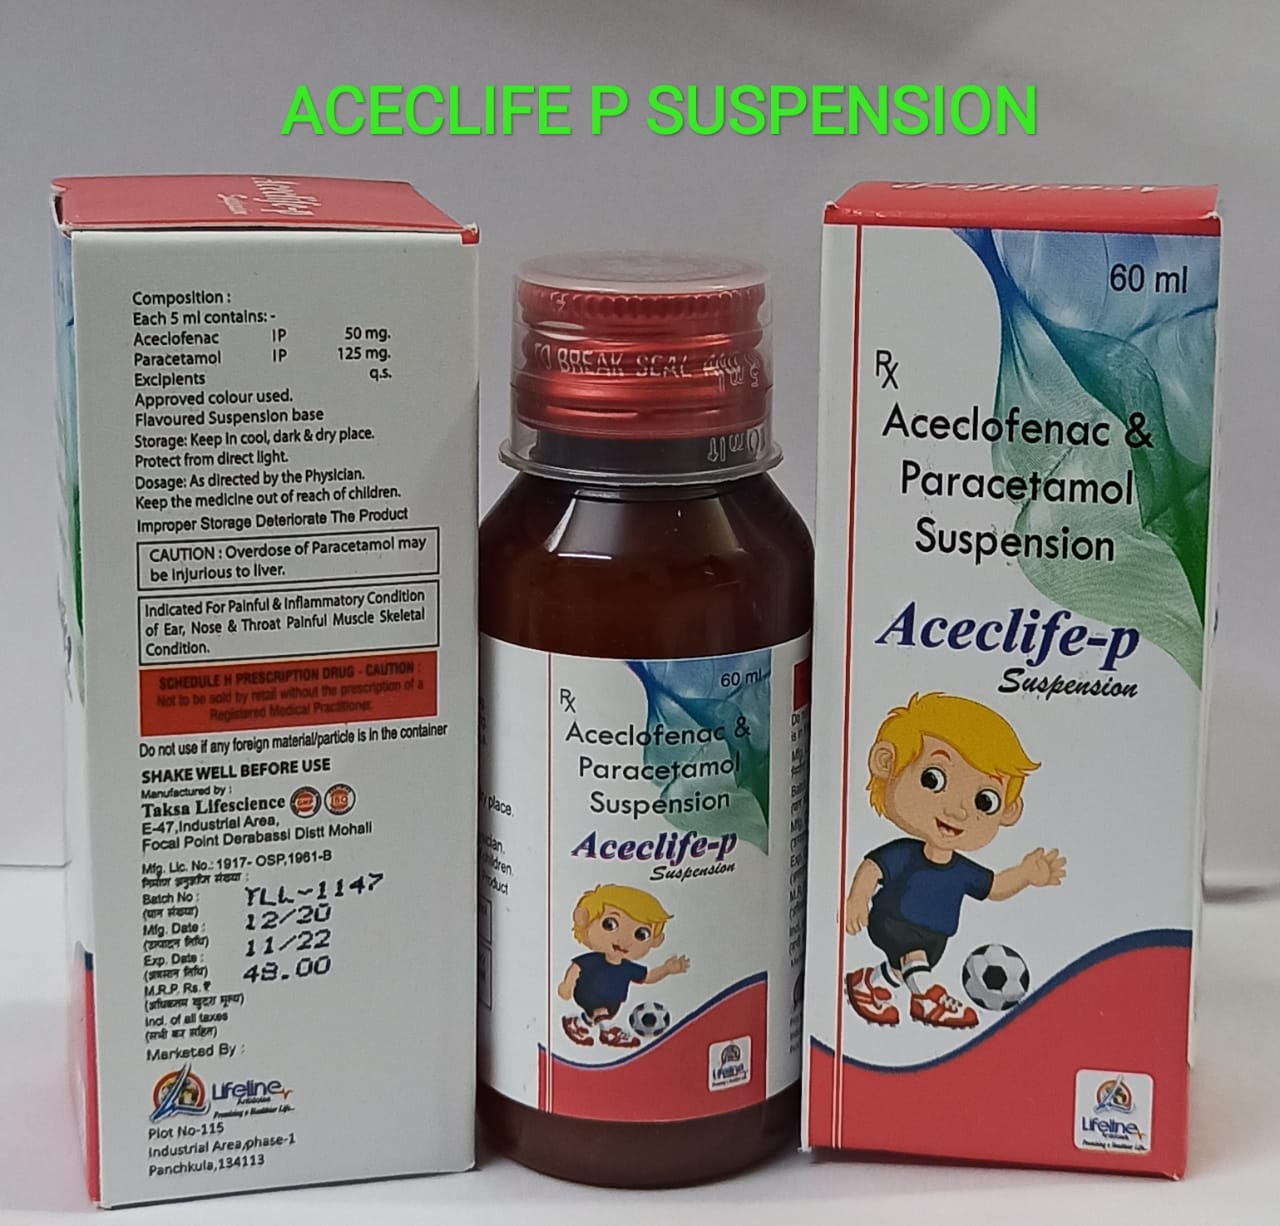 Aceclofenac Paracetamol suspensionn